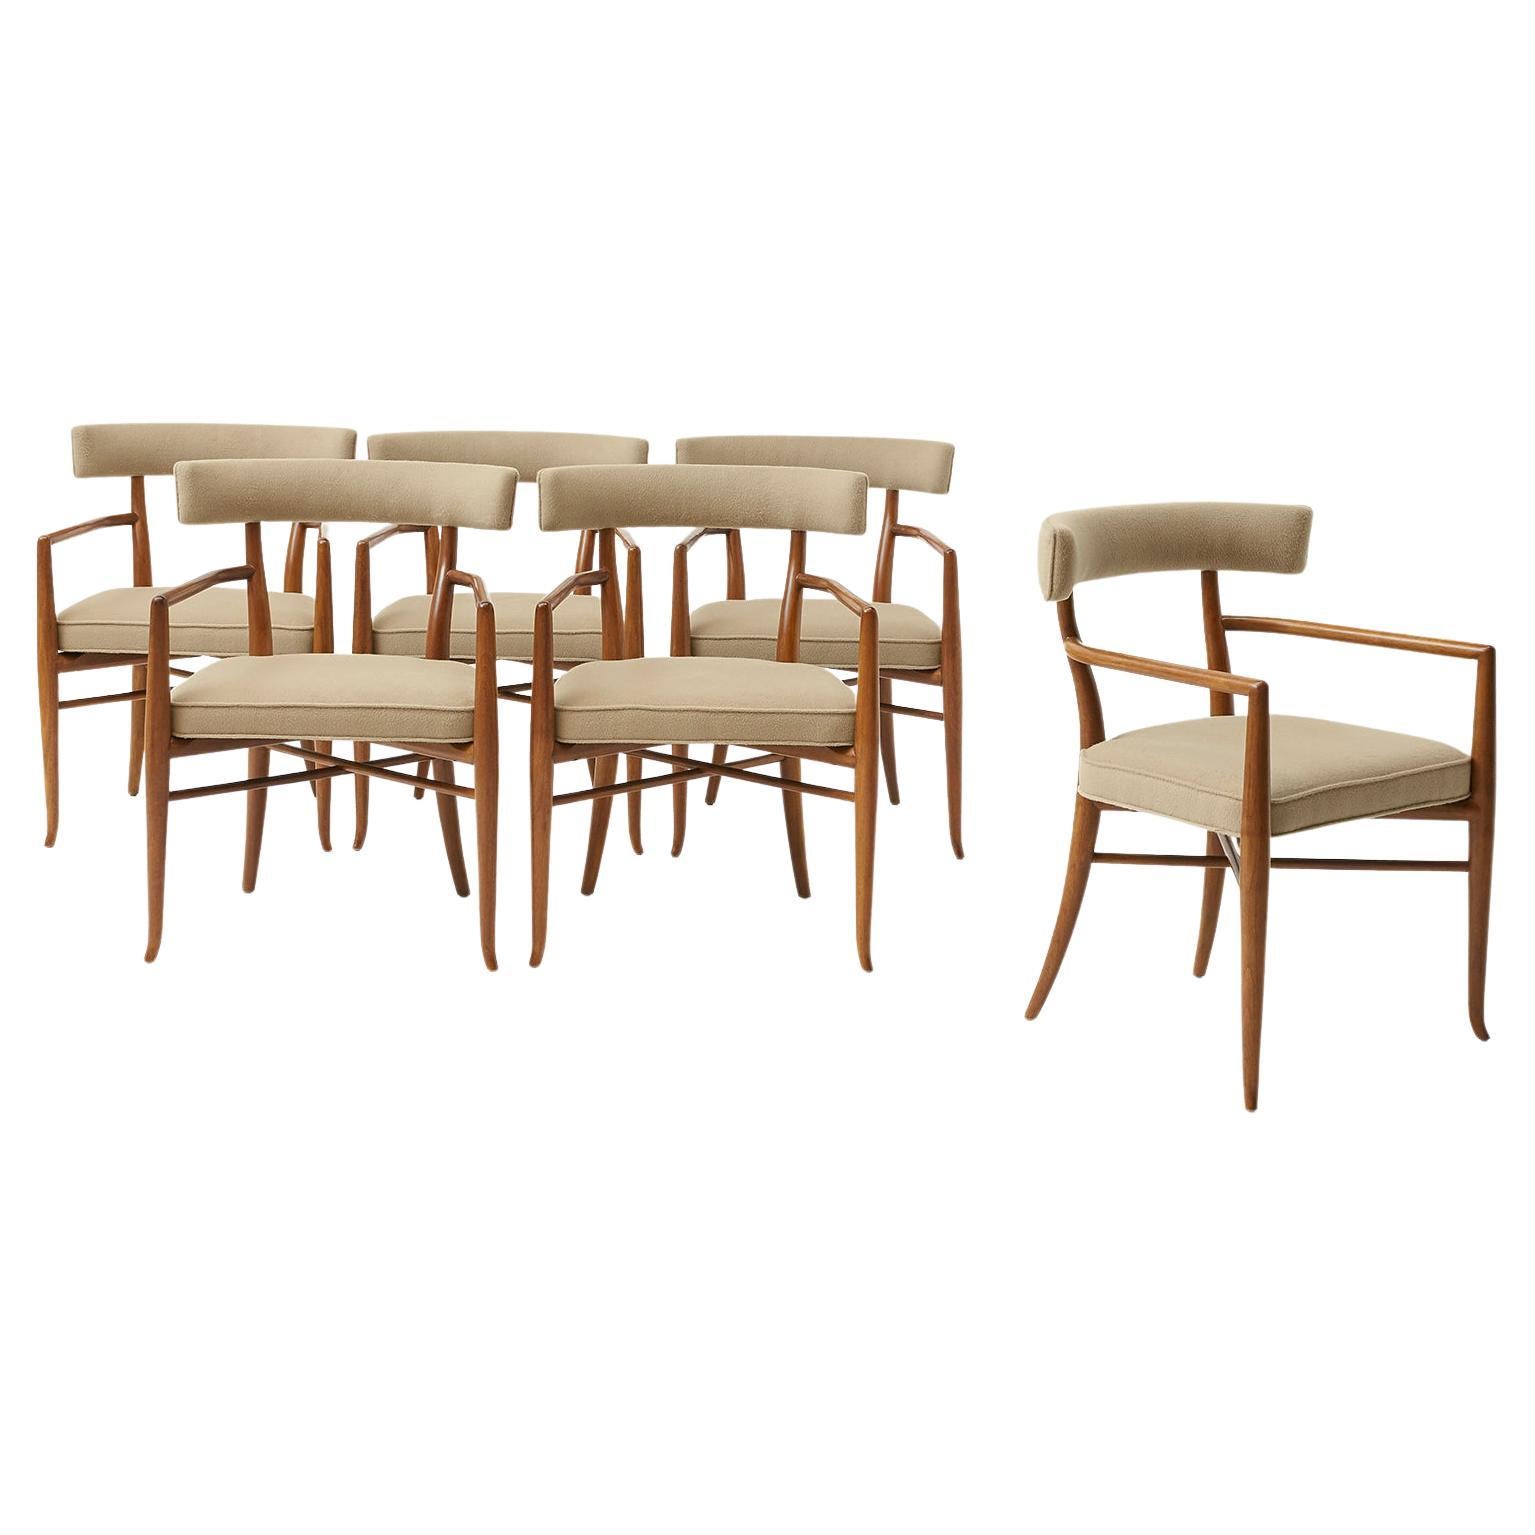 Set of 6 Arm Chairs by T H Robsjohn-Gibbings